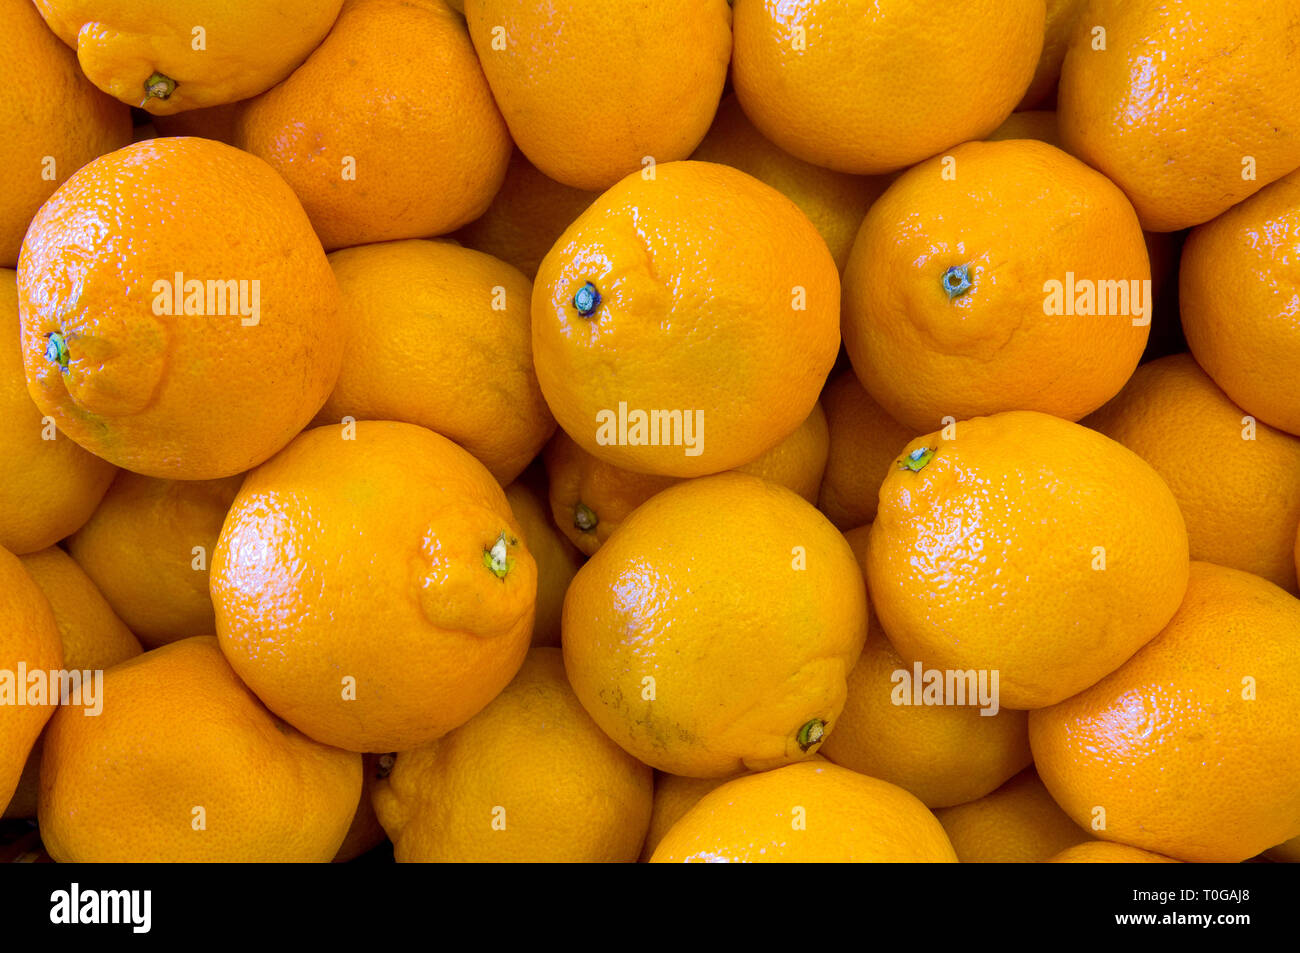 Close-up of various ripe oranges. Stock Photo